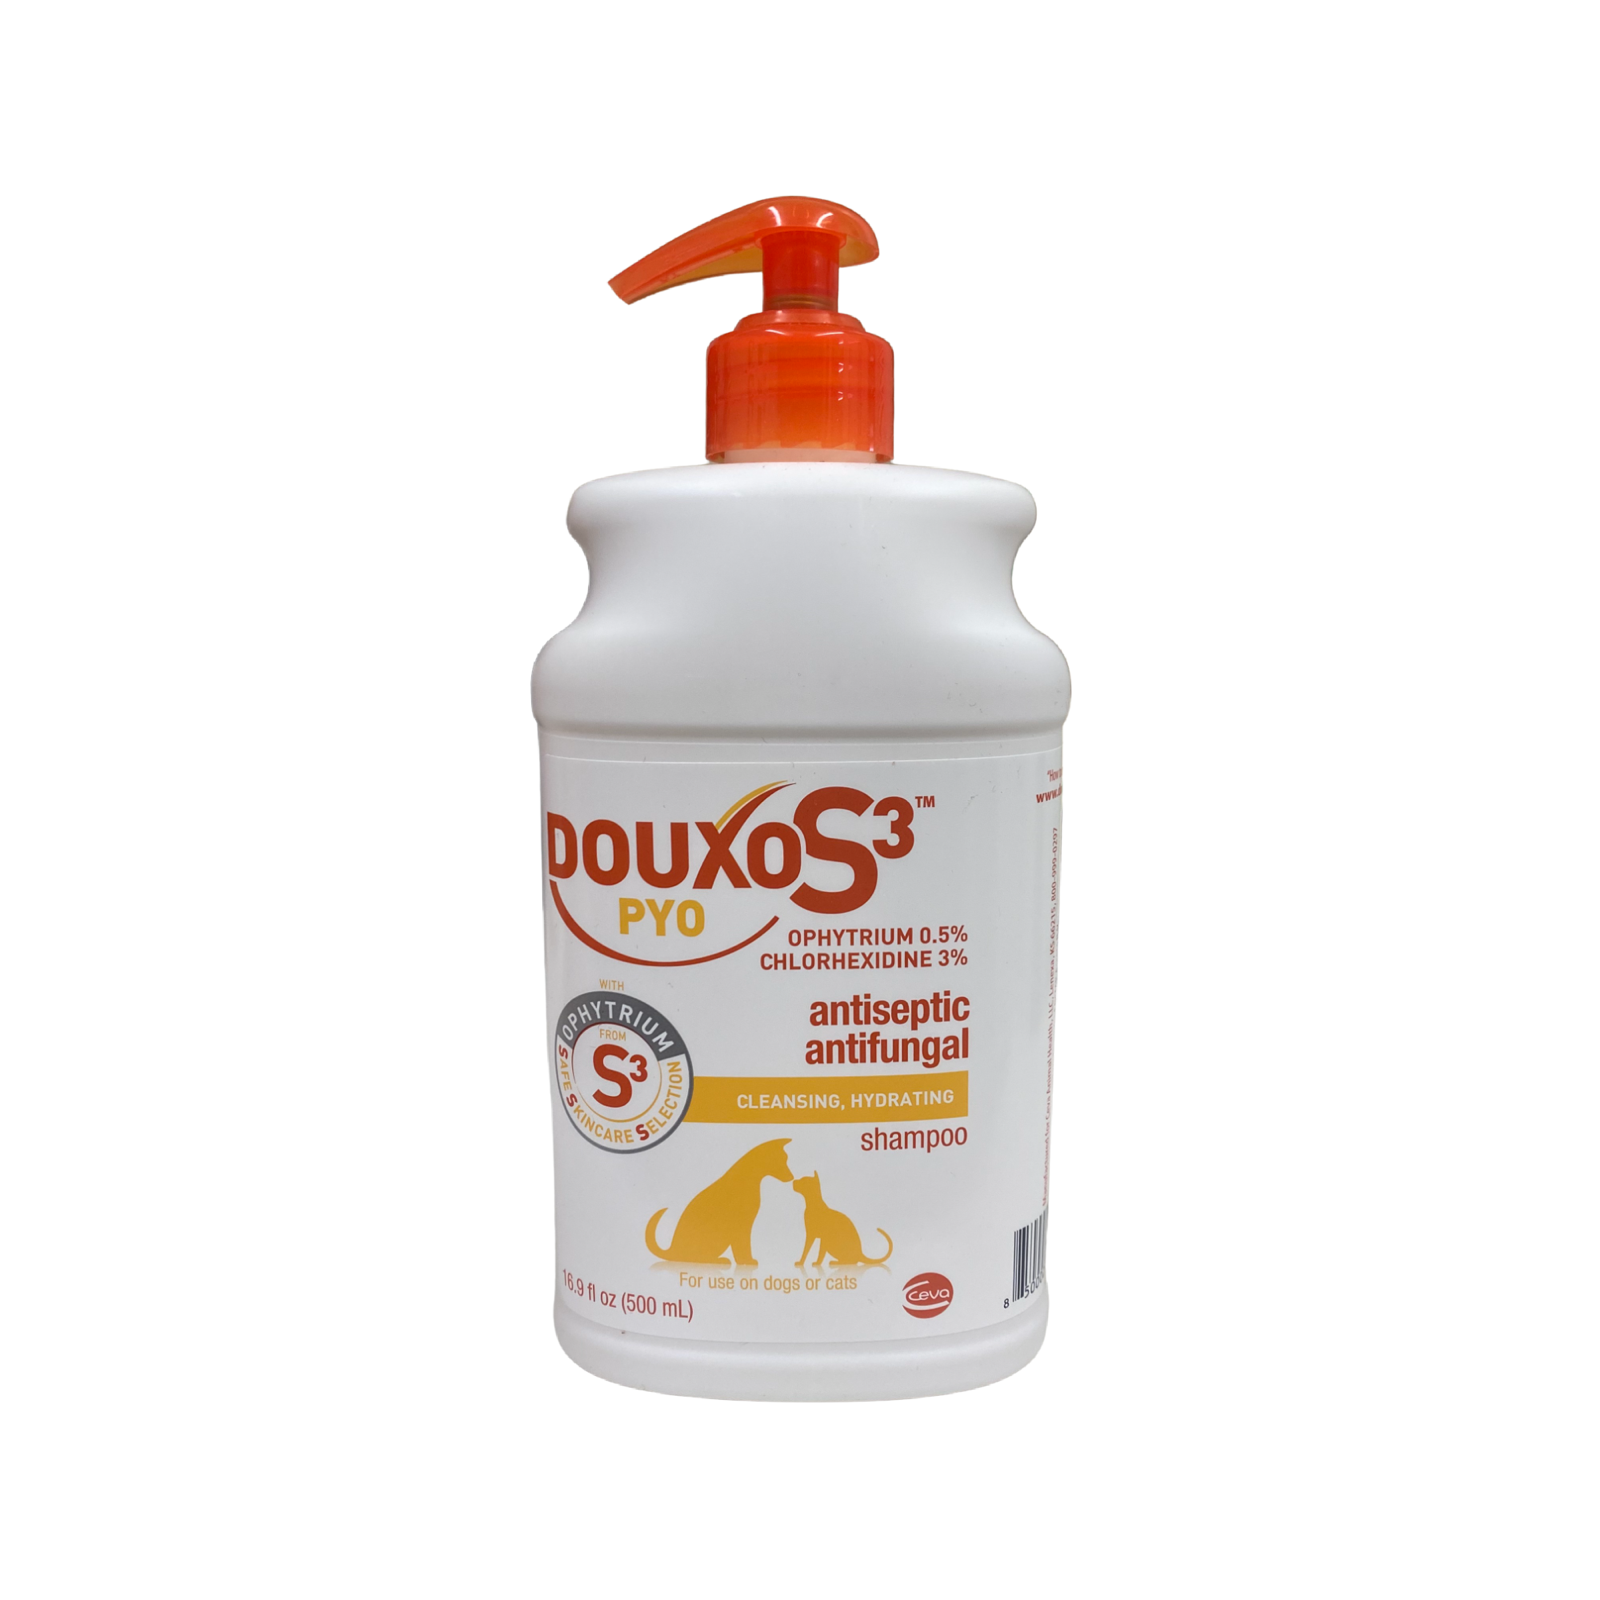 Douxos3 Pyo Chlorhexidine + Ophytrium Shampoo 16.9oz (500ml)